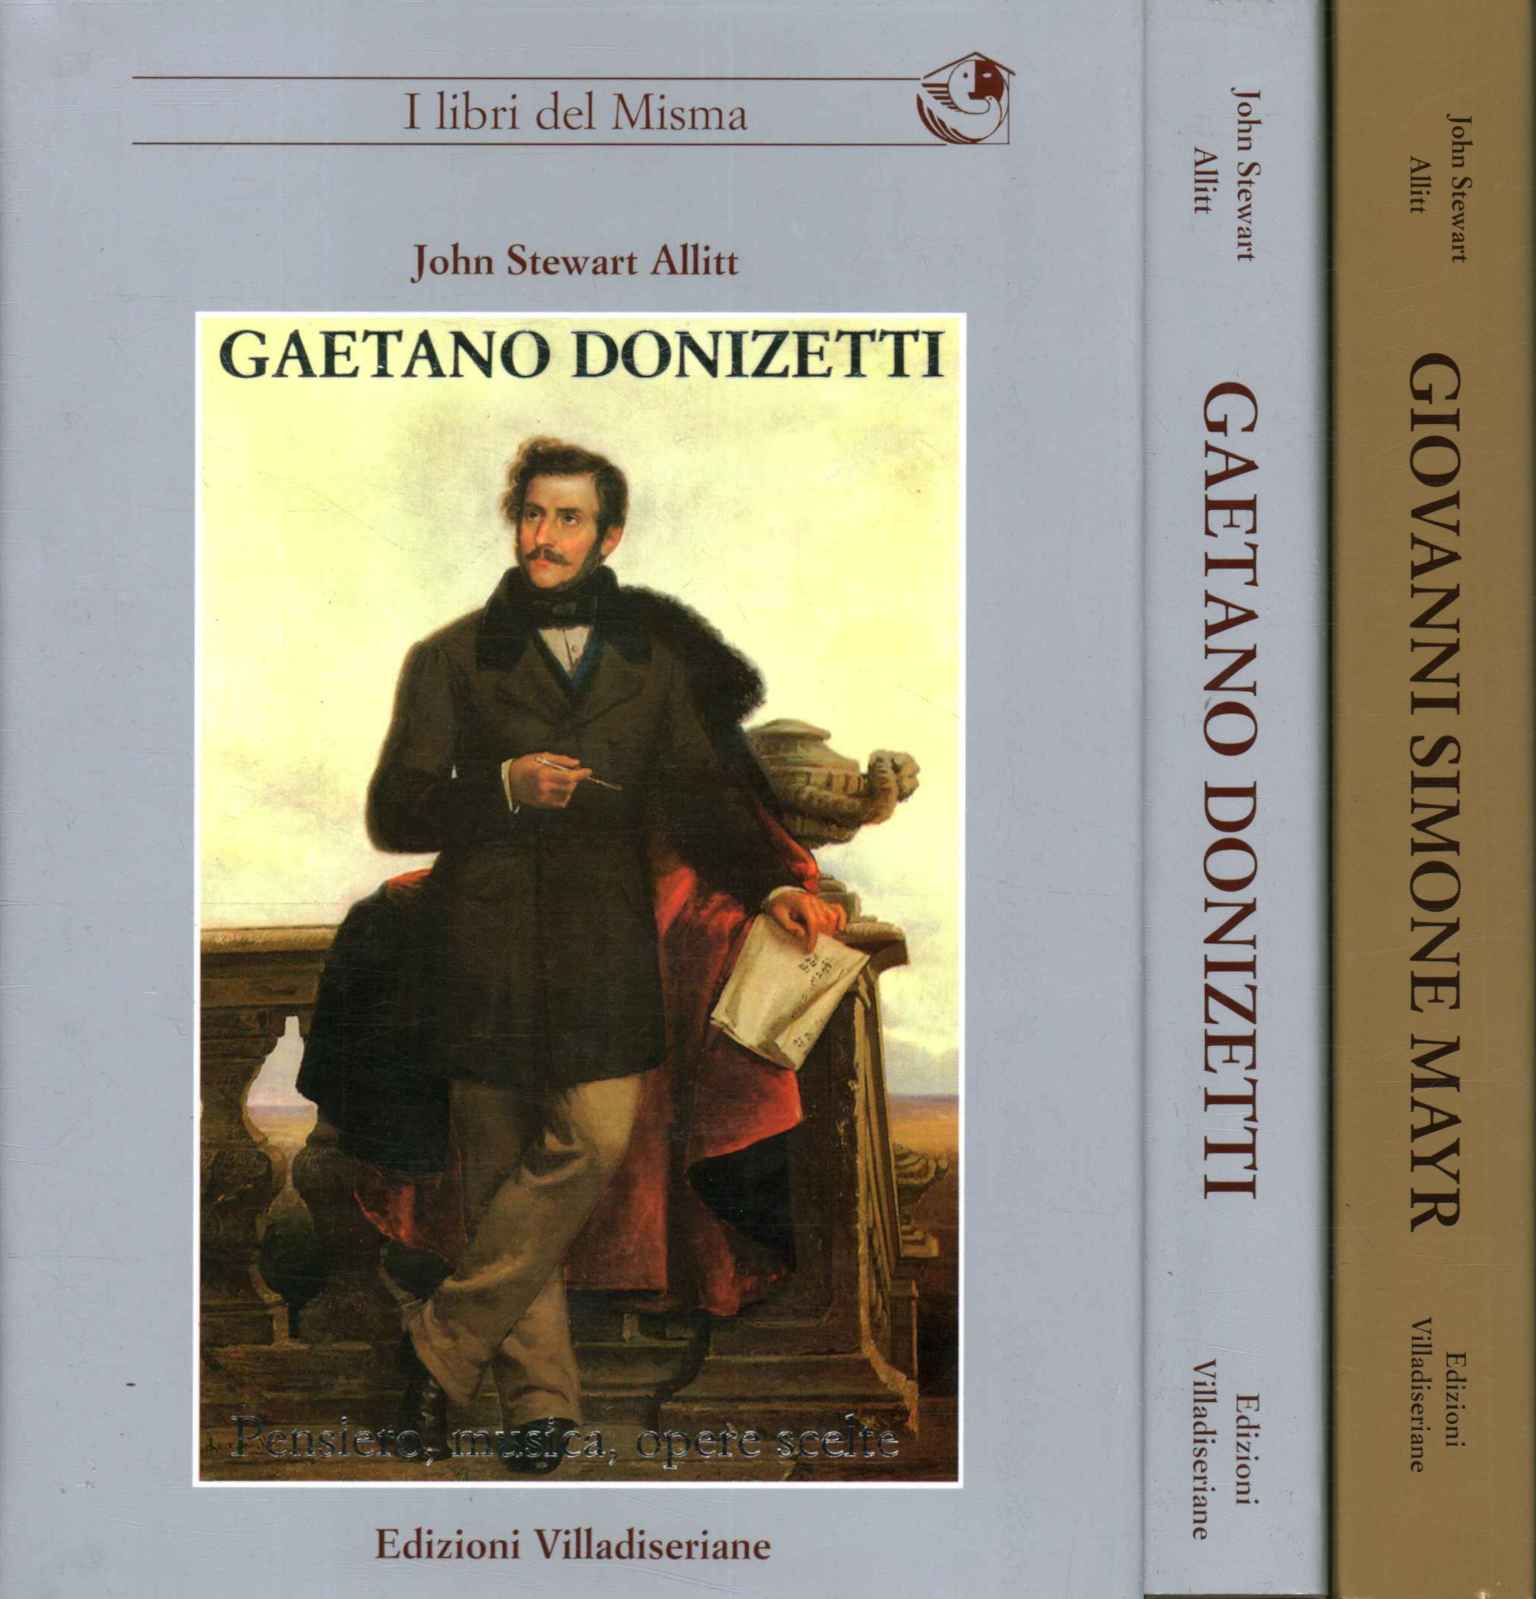 Gaetano Donizetti. Thought music, works